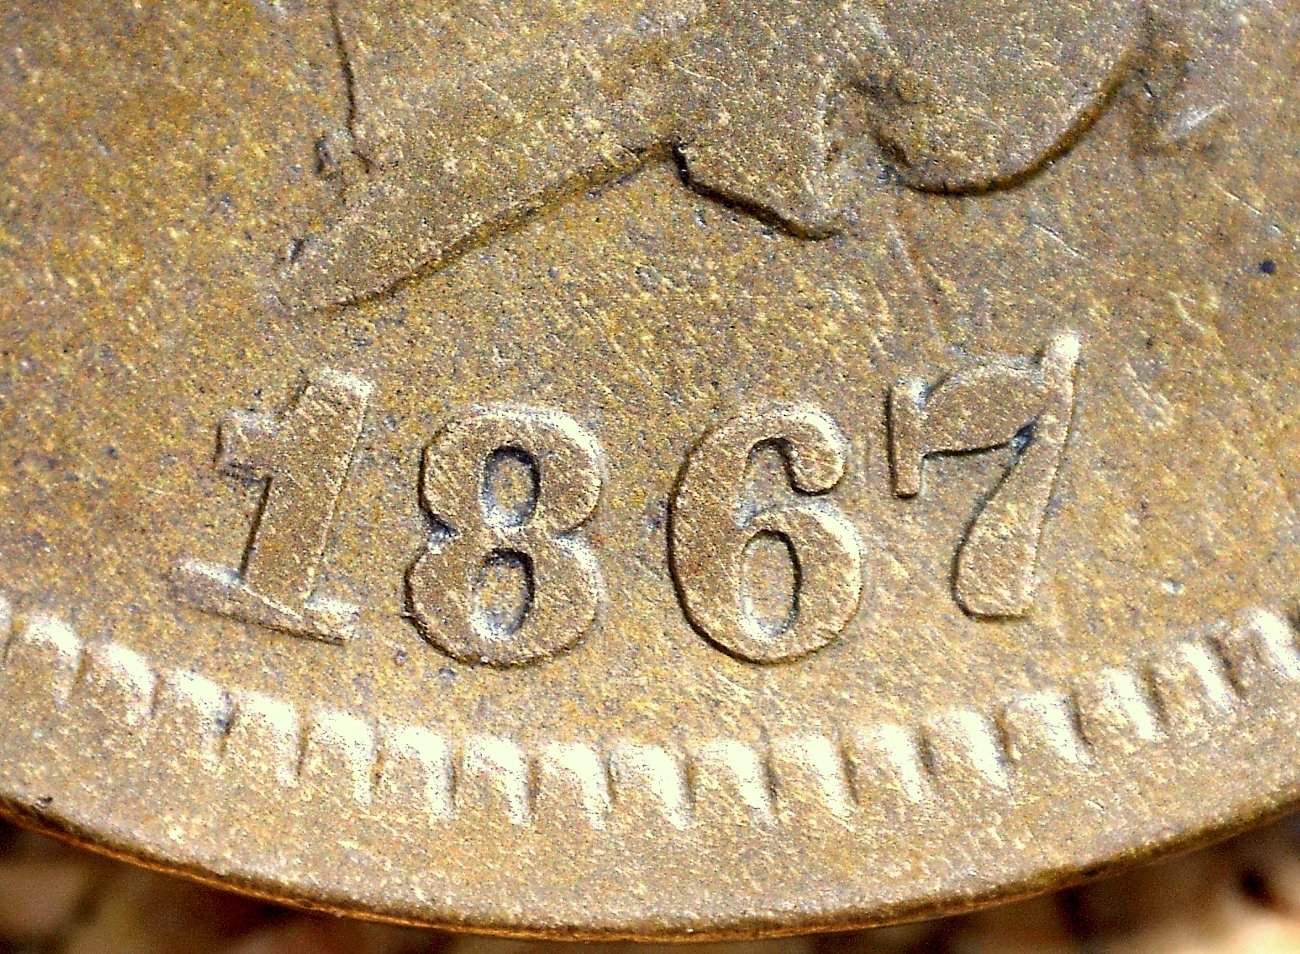 1867 RPD-002 - Indian Head Penny - Photo by David Killough